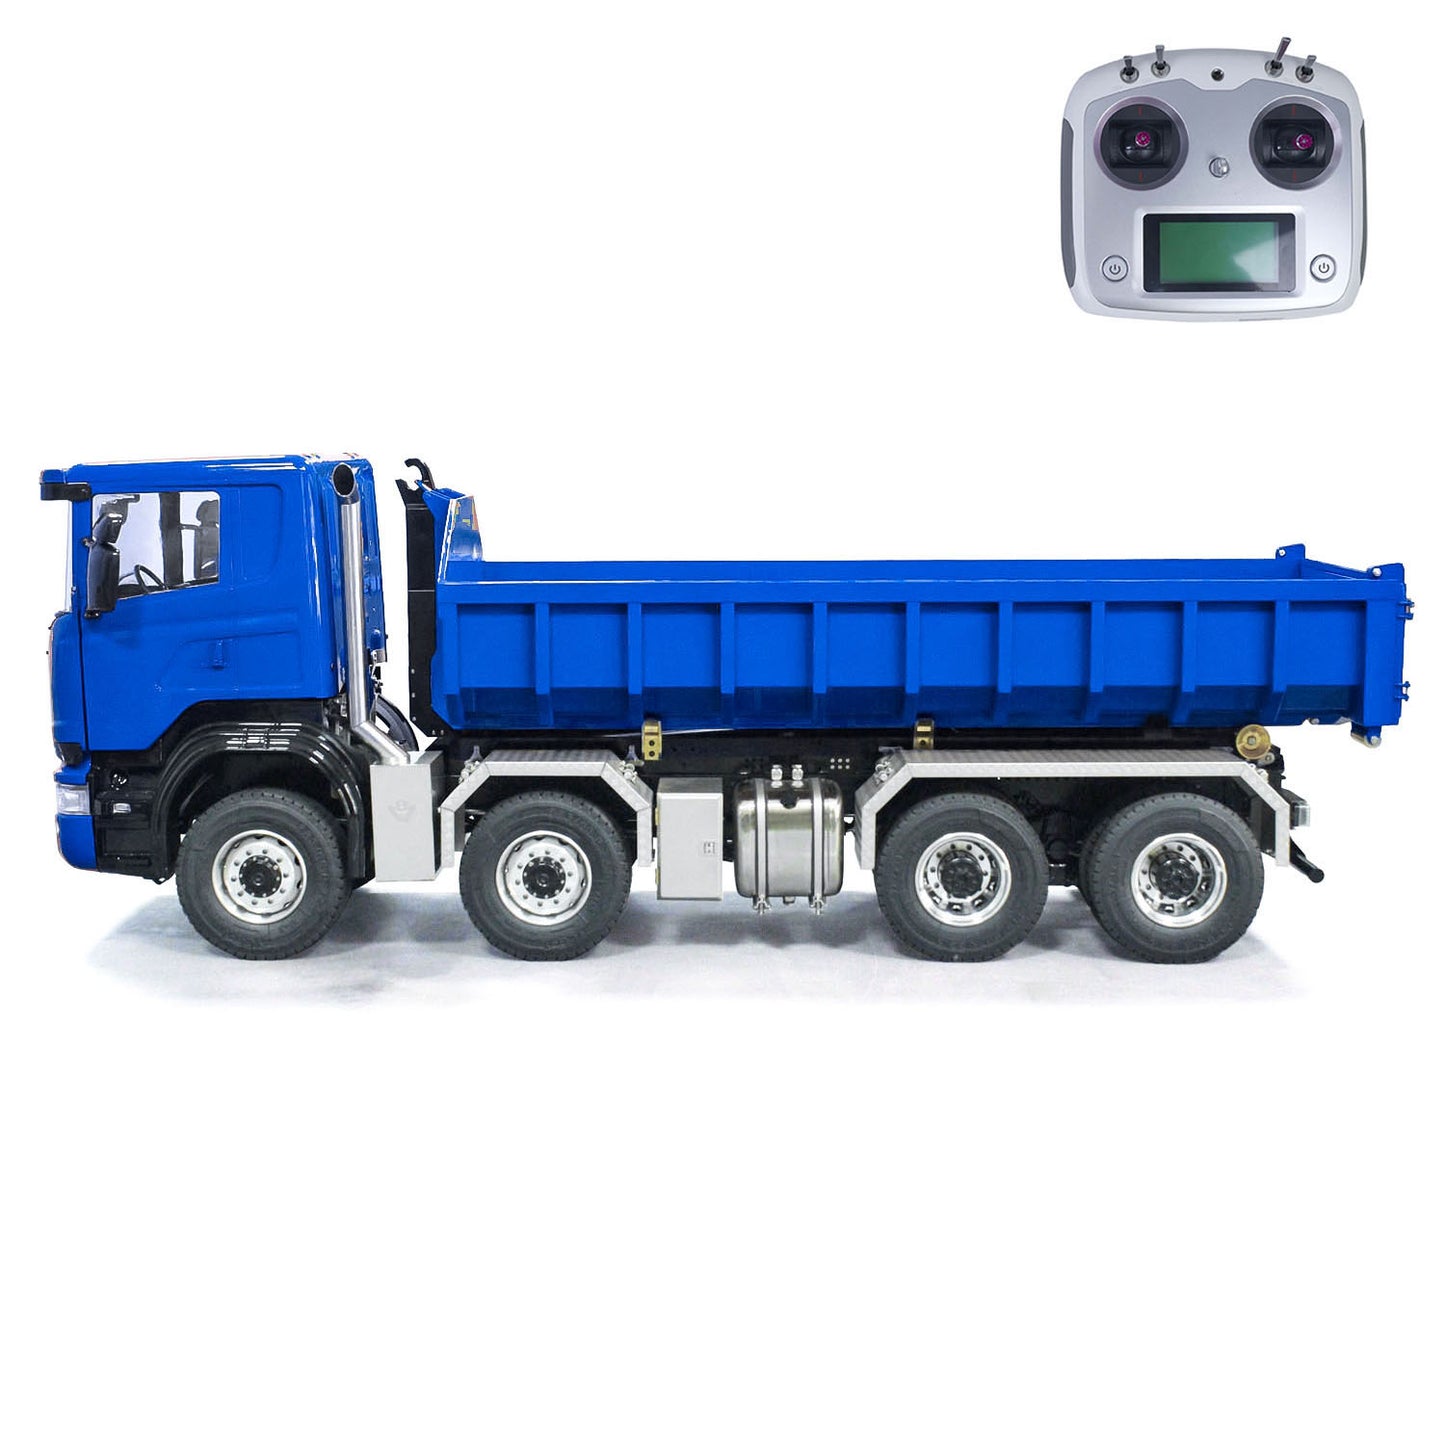 1/14 8x8 PNP RC Hydraulic Roll On/Off Dumper Truck G88 With Metal Bucket